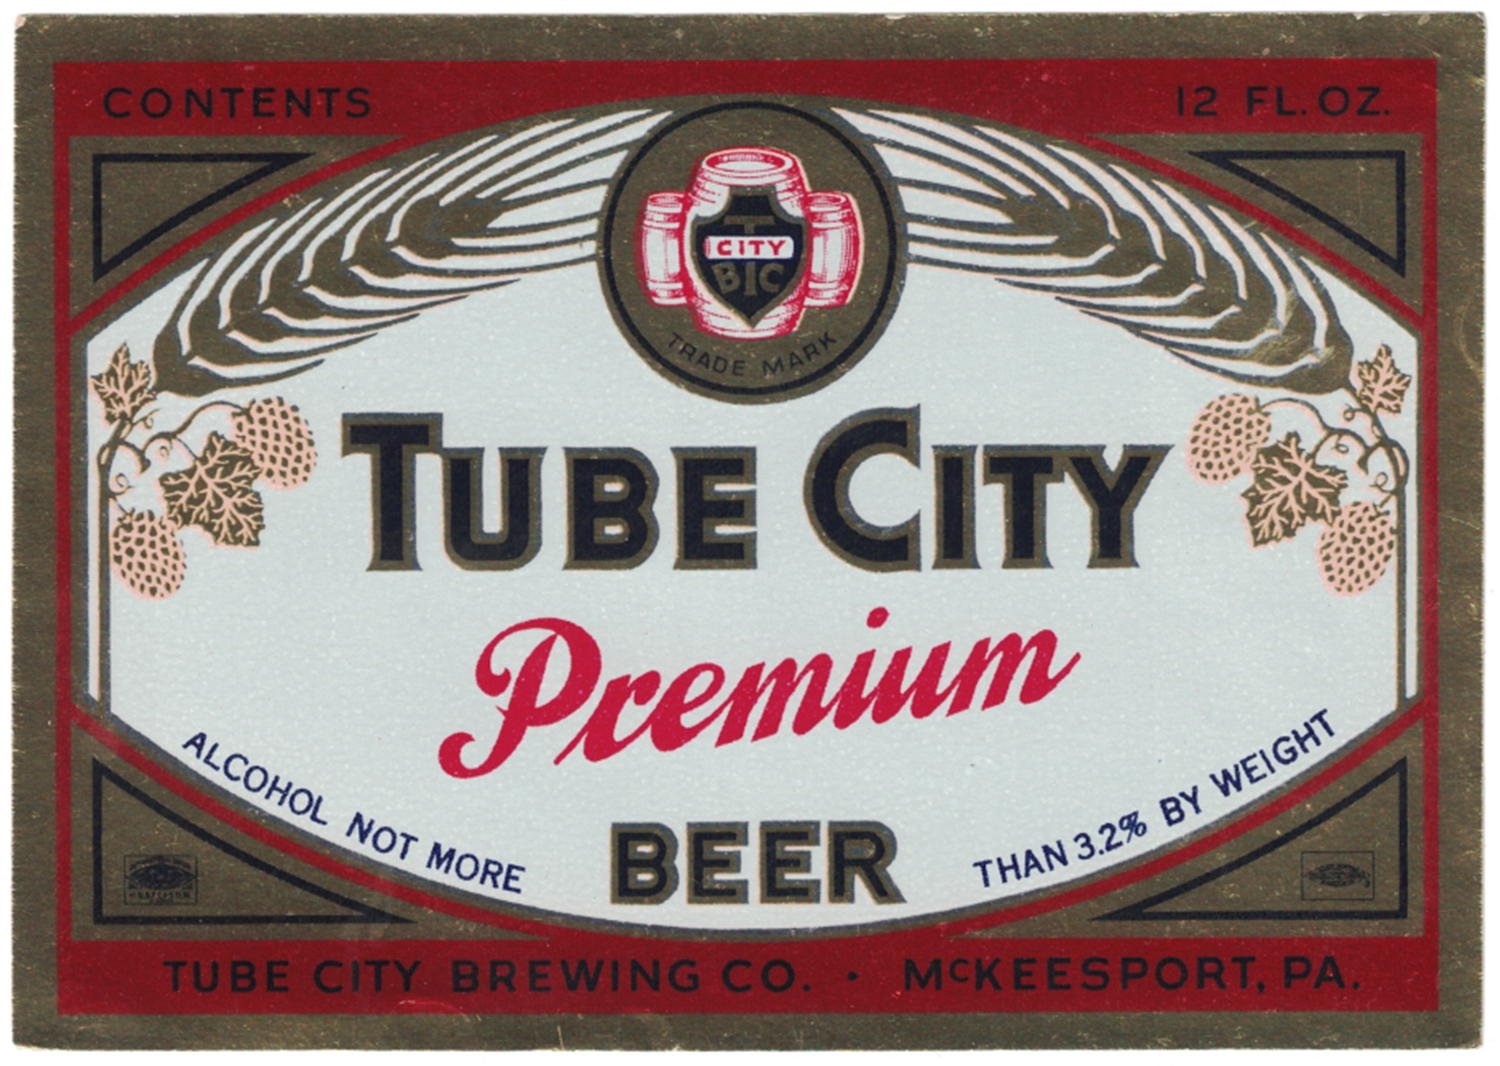 Tube City Premium Beer Label